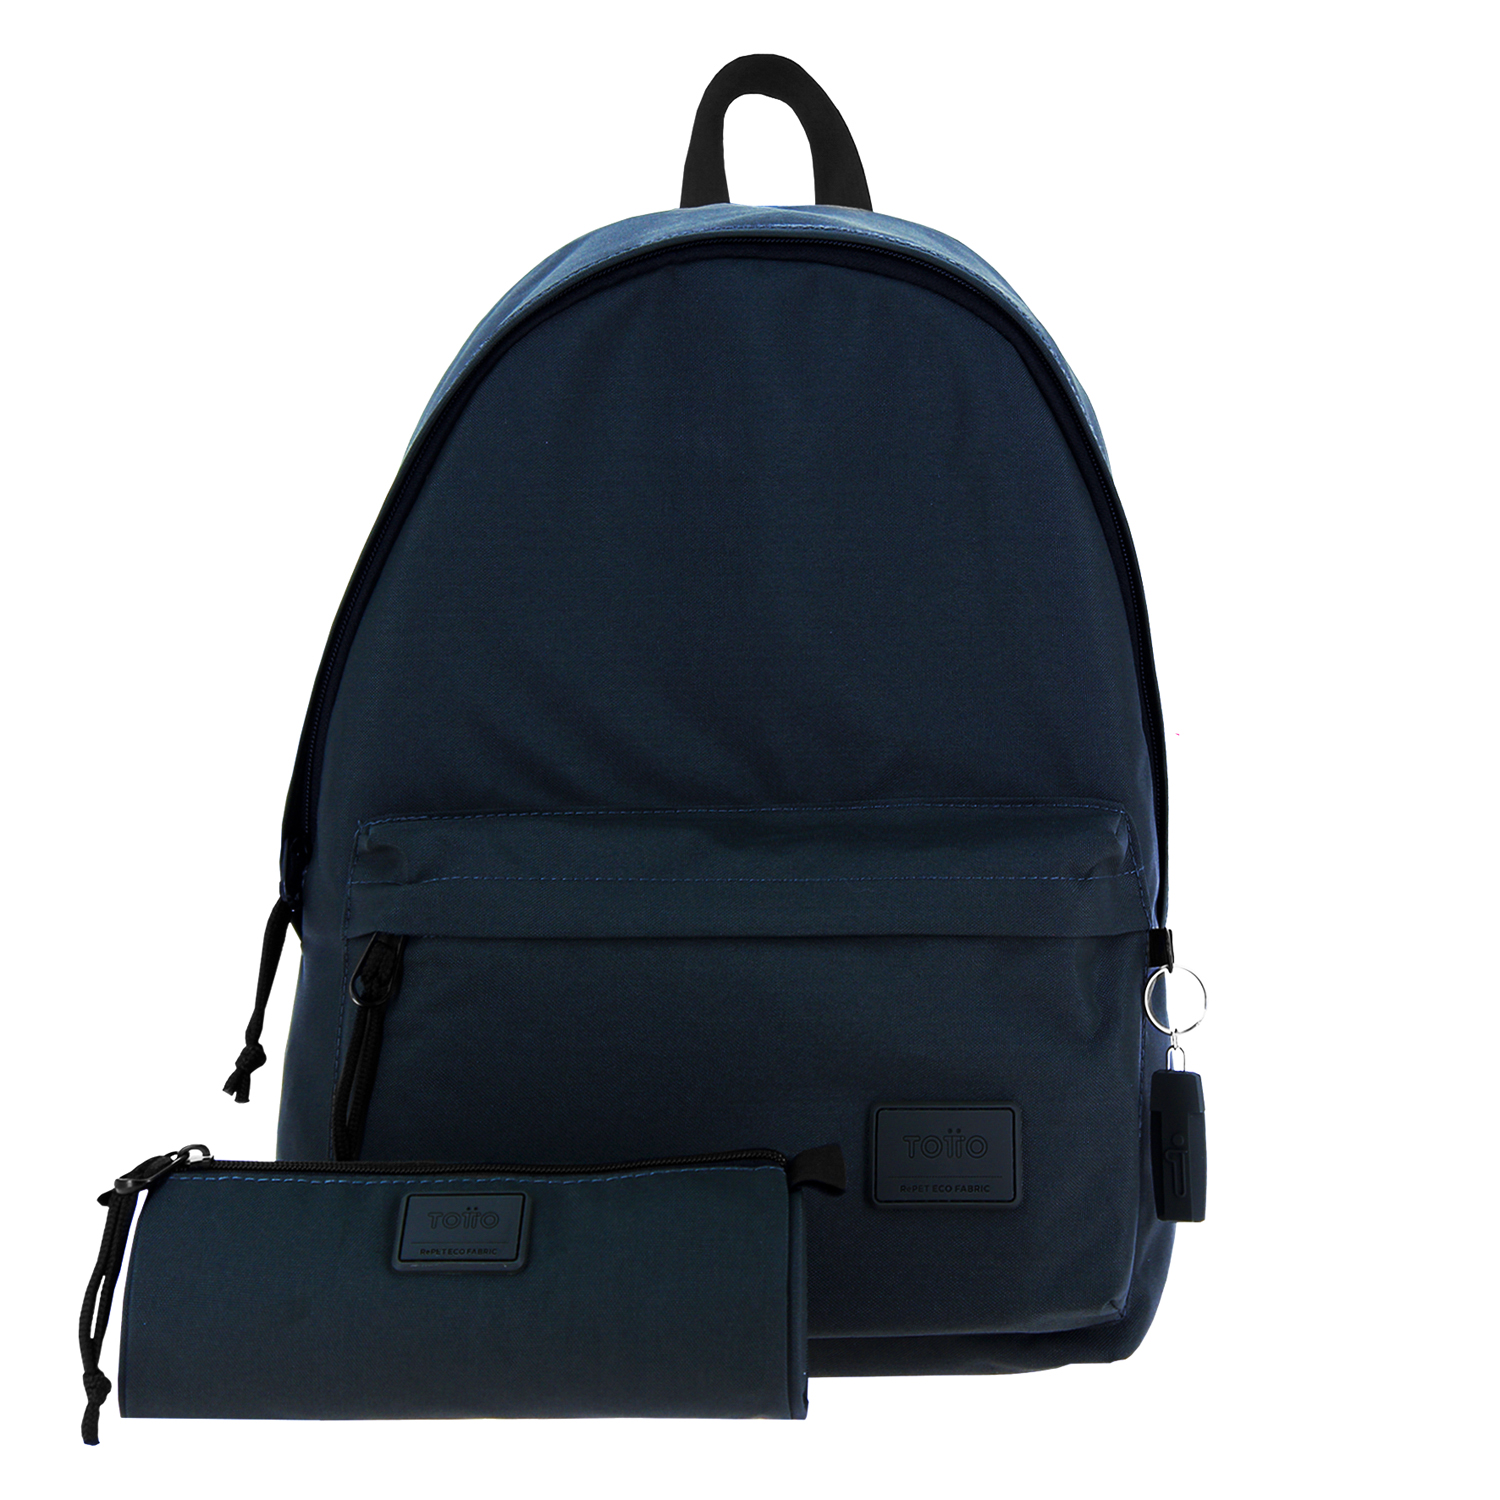 Pack mochila + estuche color azul oscuro - Kalex